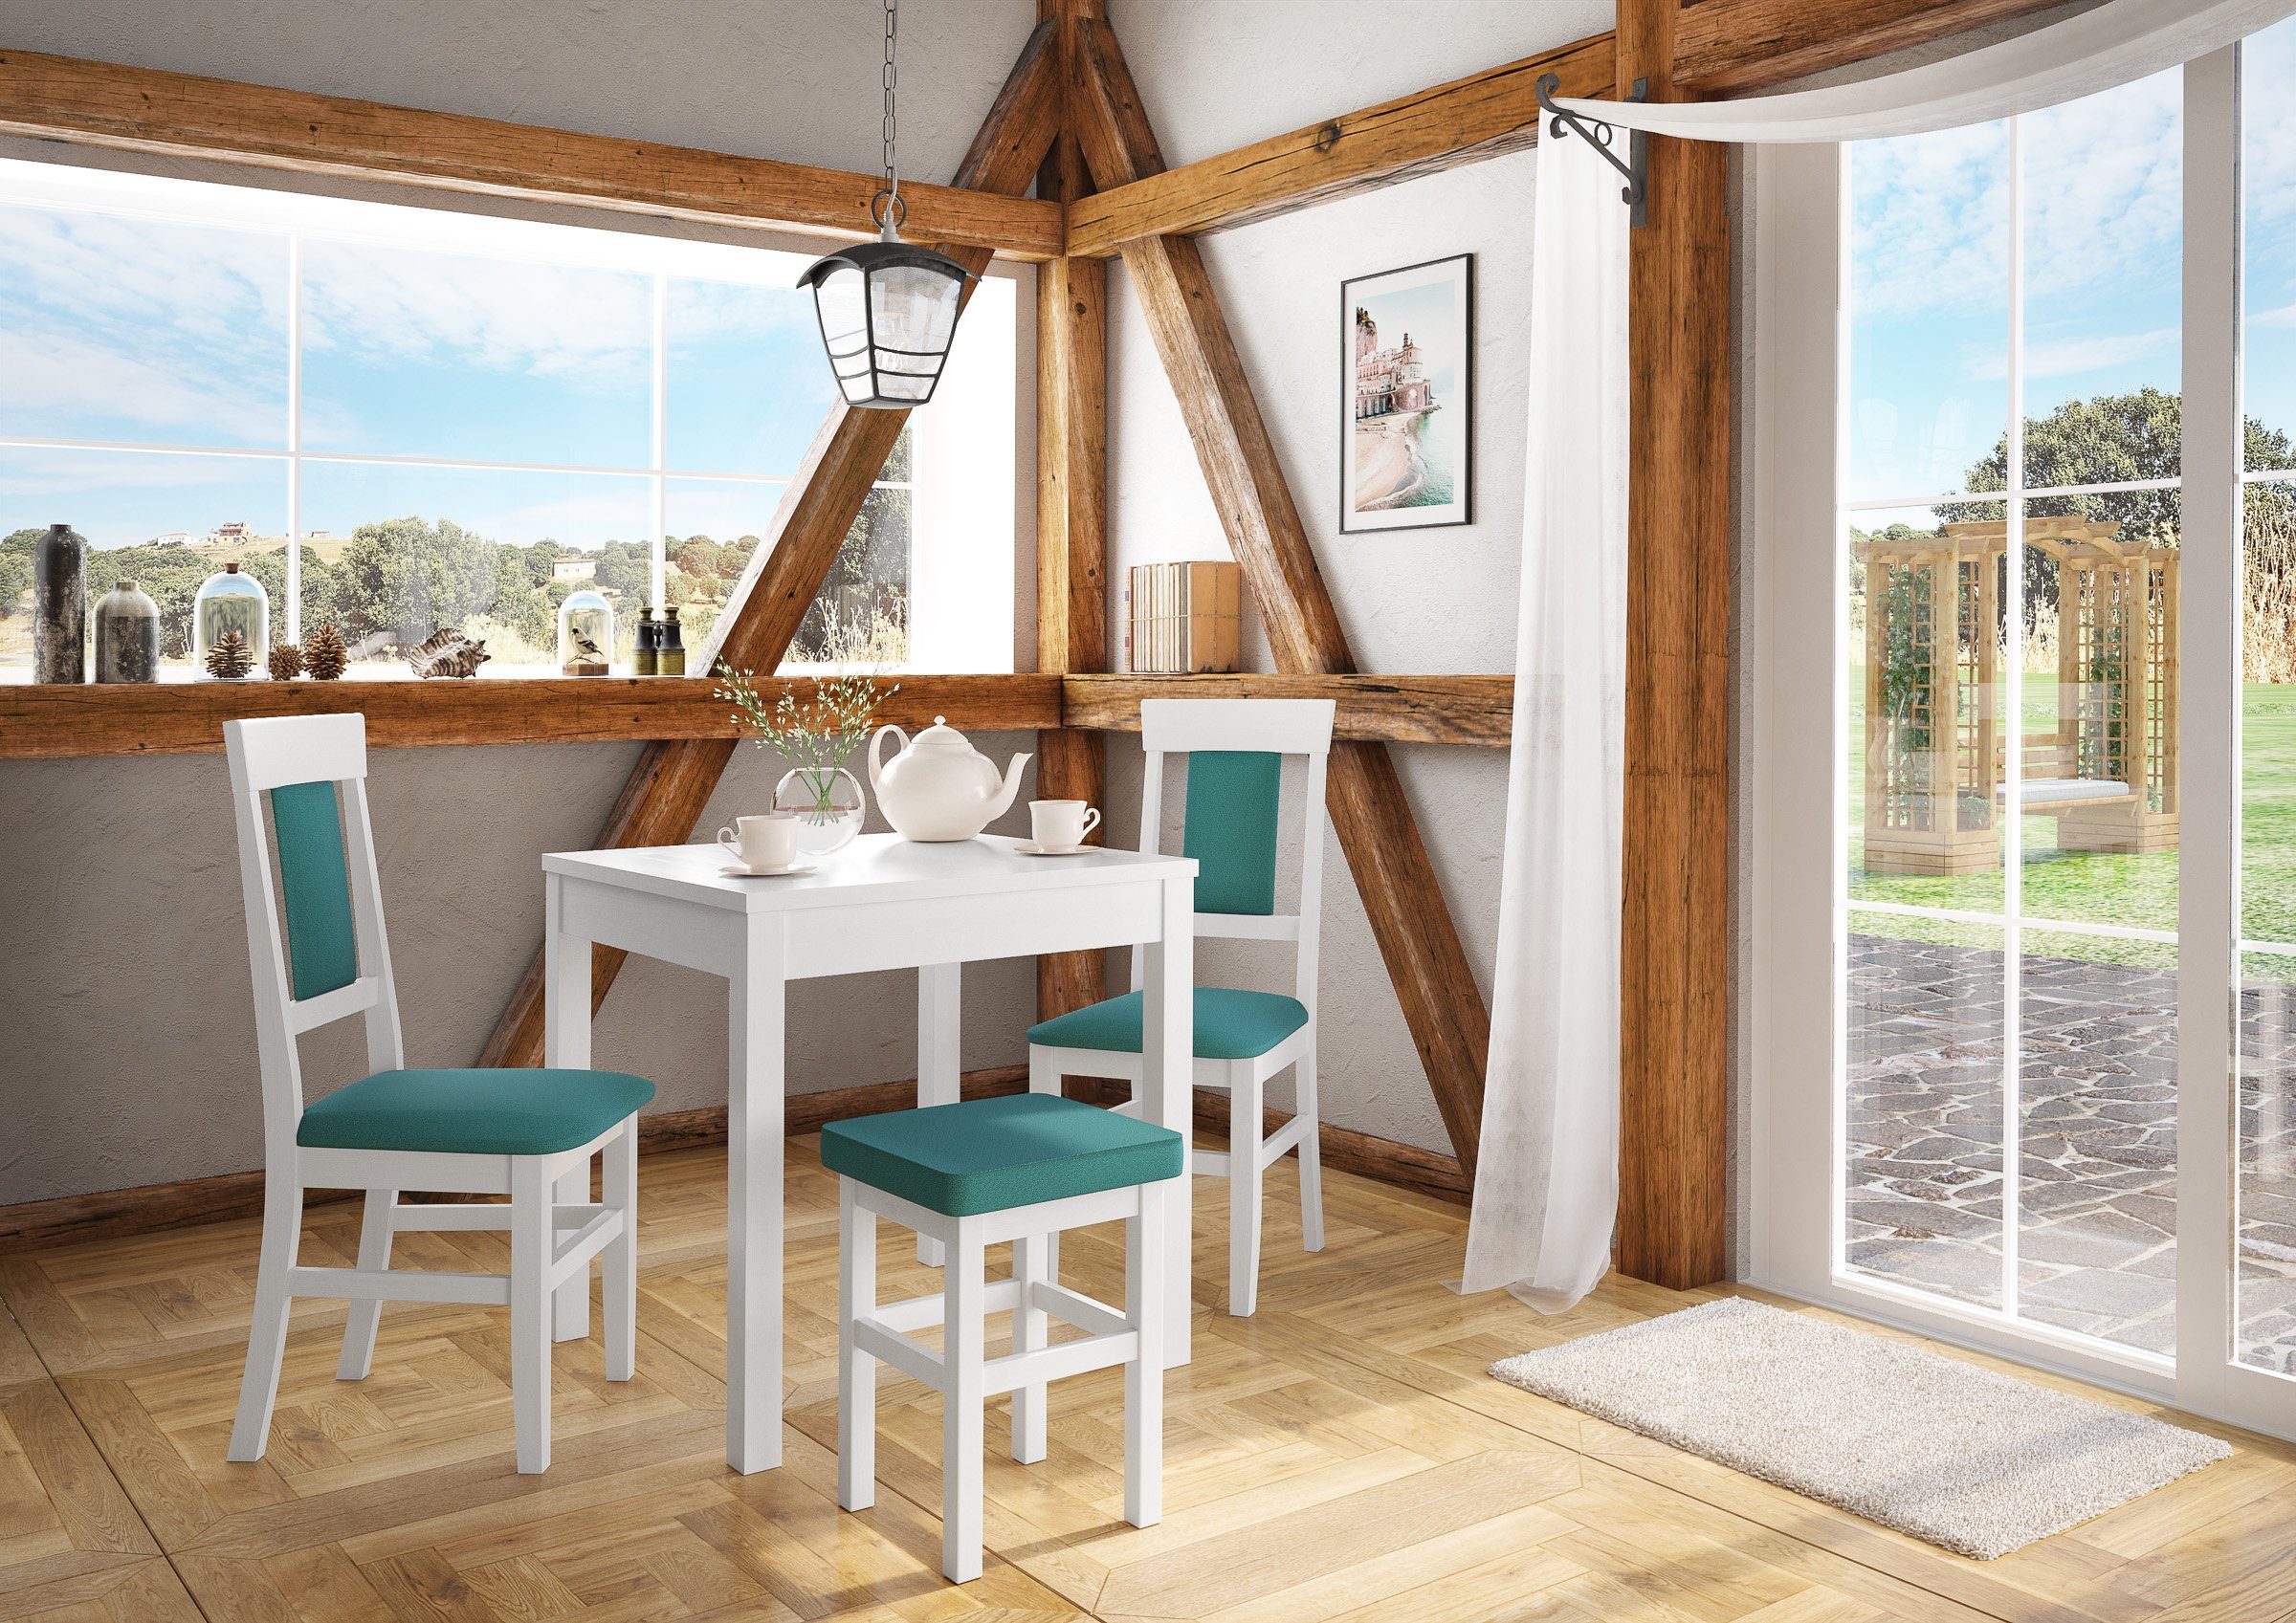 Massivholz-Stuhl Farbe türkis ERST-HOLZ Küchenstuhl Gepolsterter Esszimmerstuhl Esszimmerstuhl